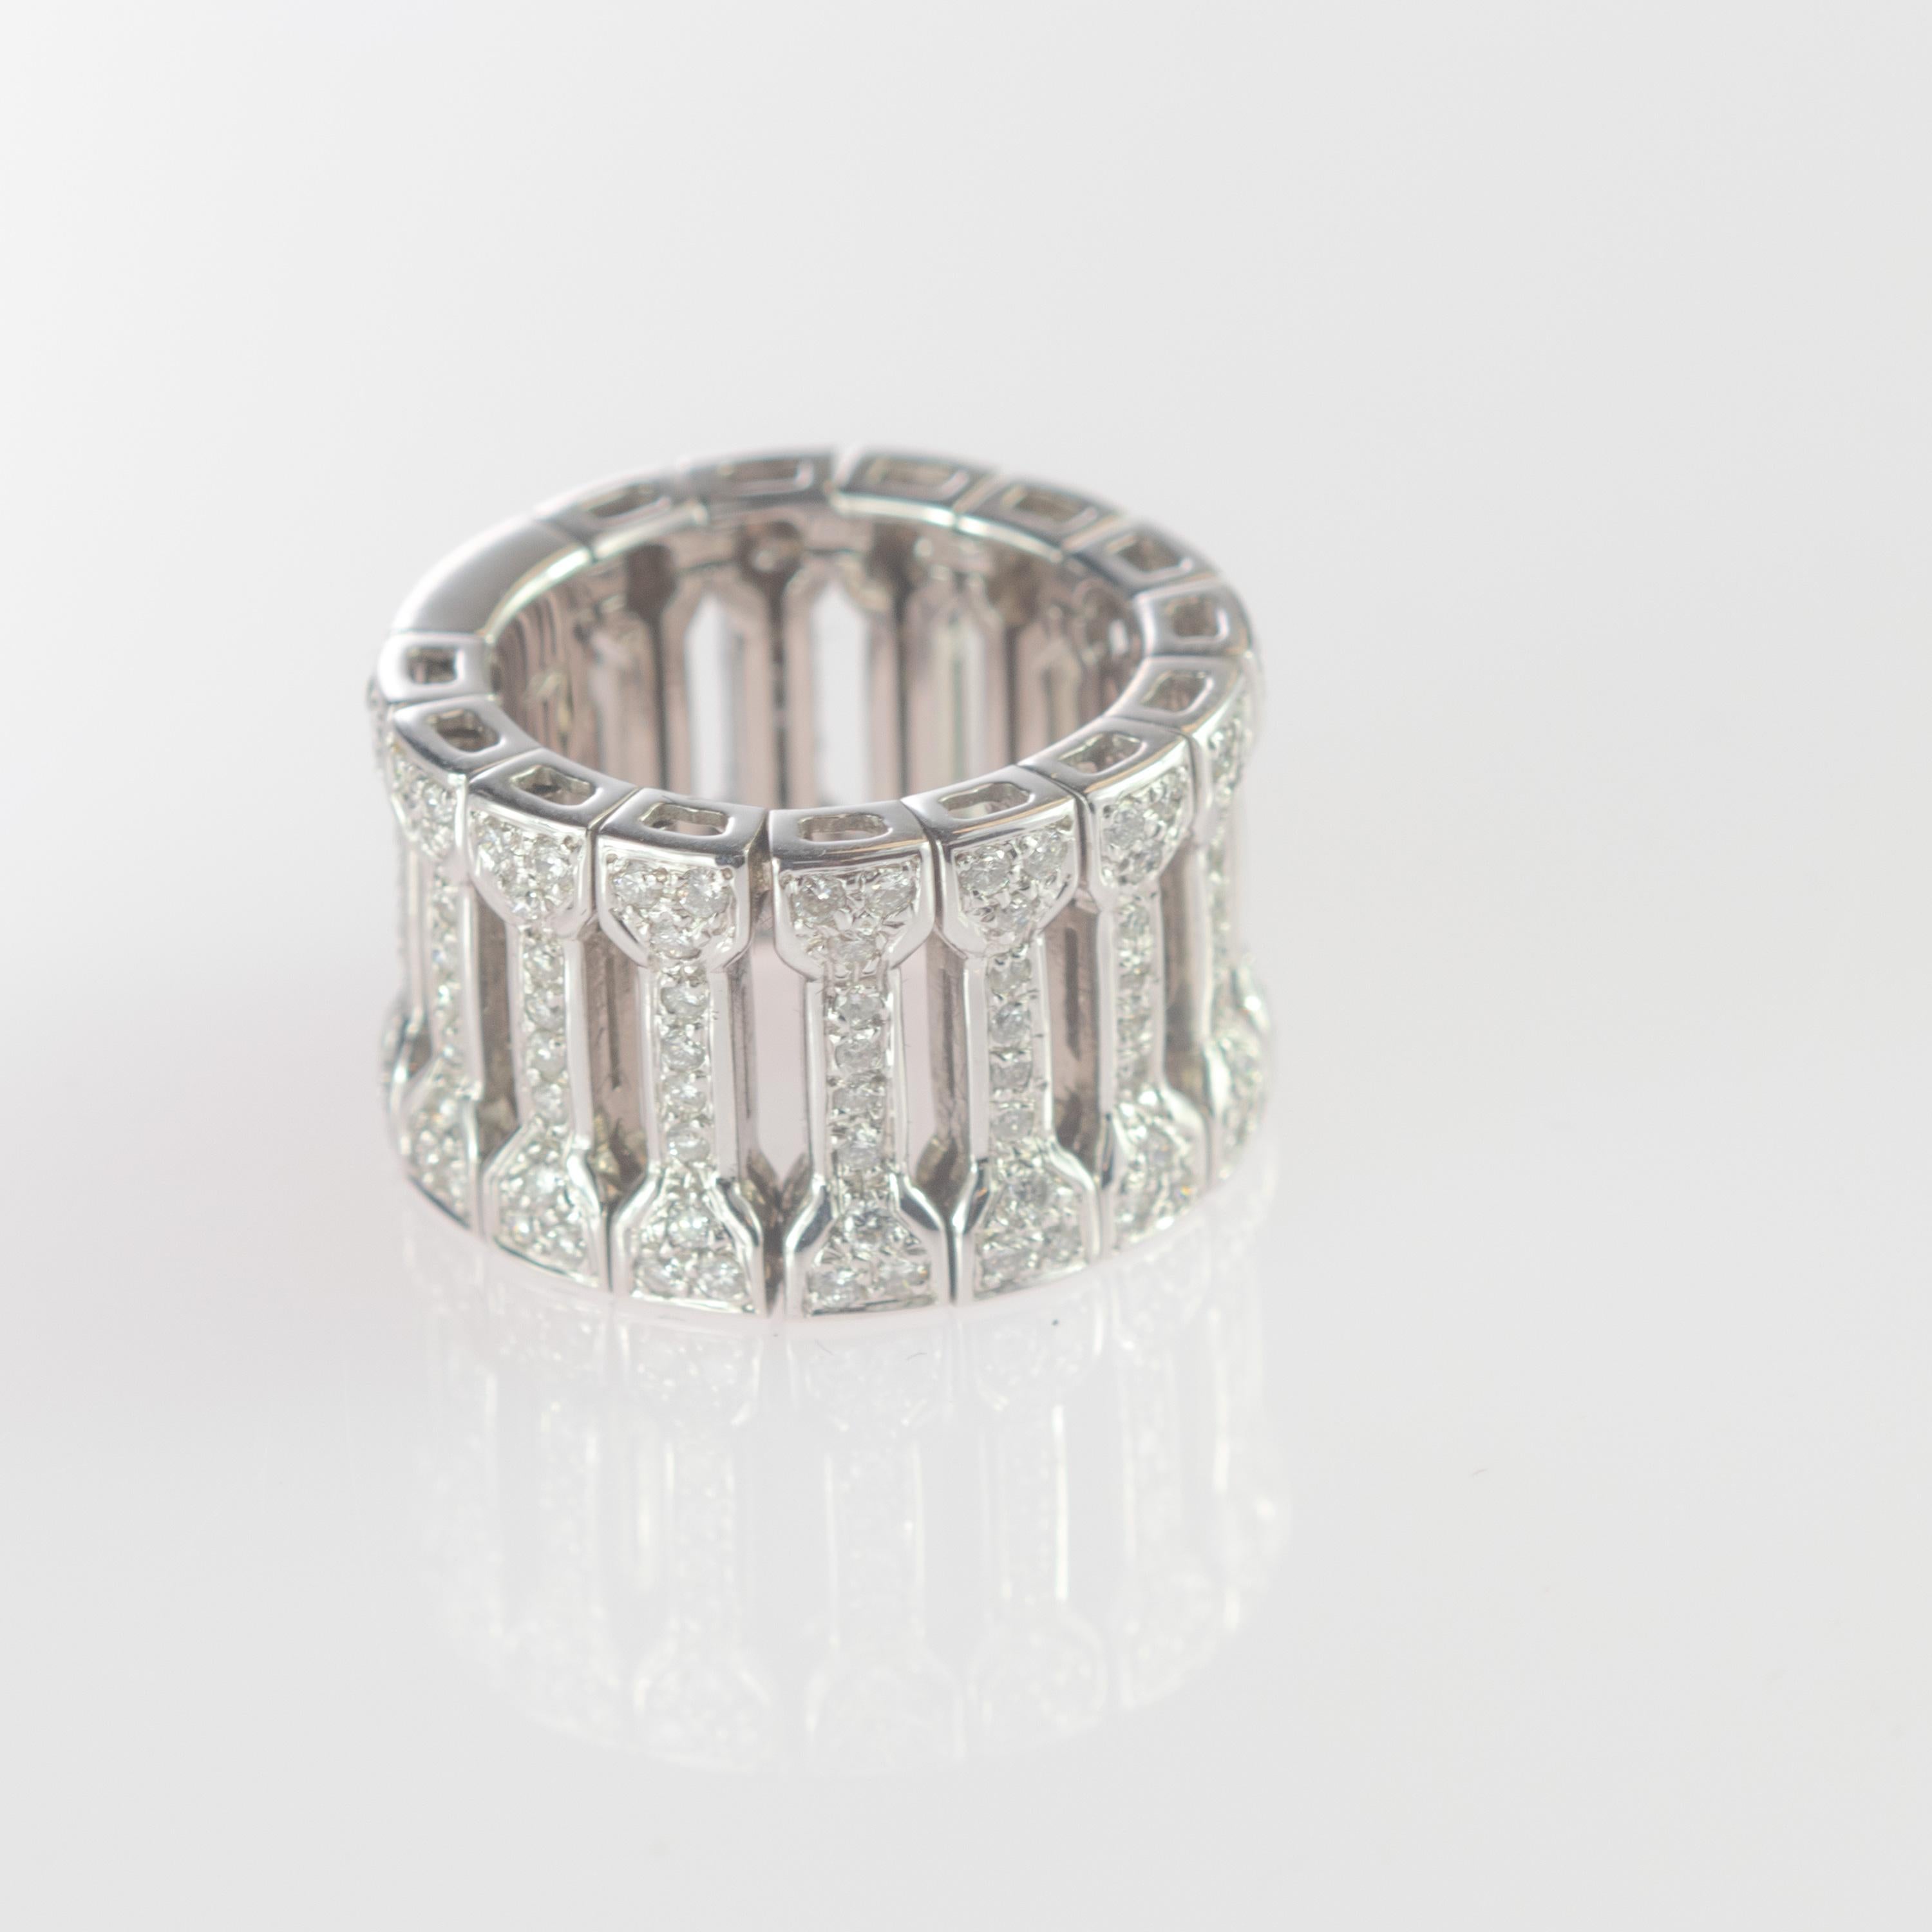 Brilliant Cut Intini Jewels 1.30 Carat Natural Diamond 18 Karat White Gold Flexible Band Ring For Sale